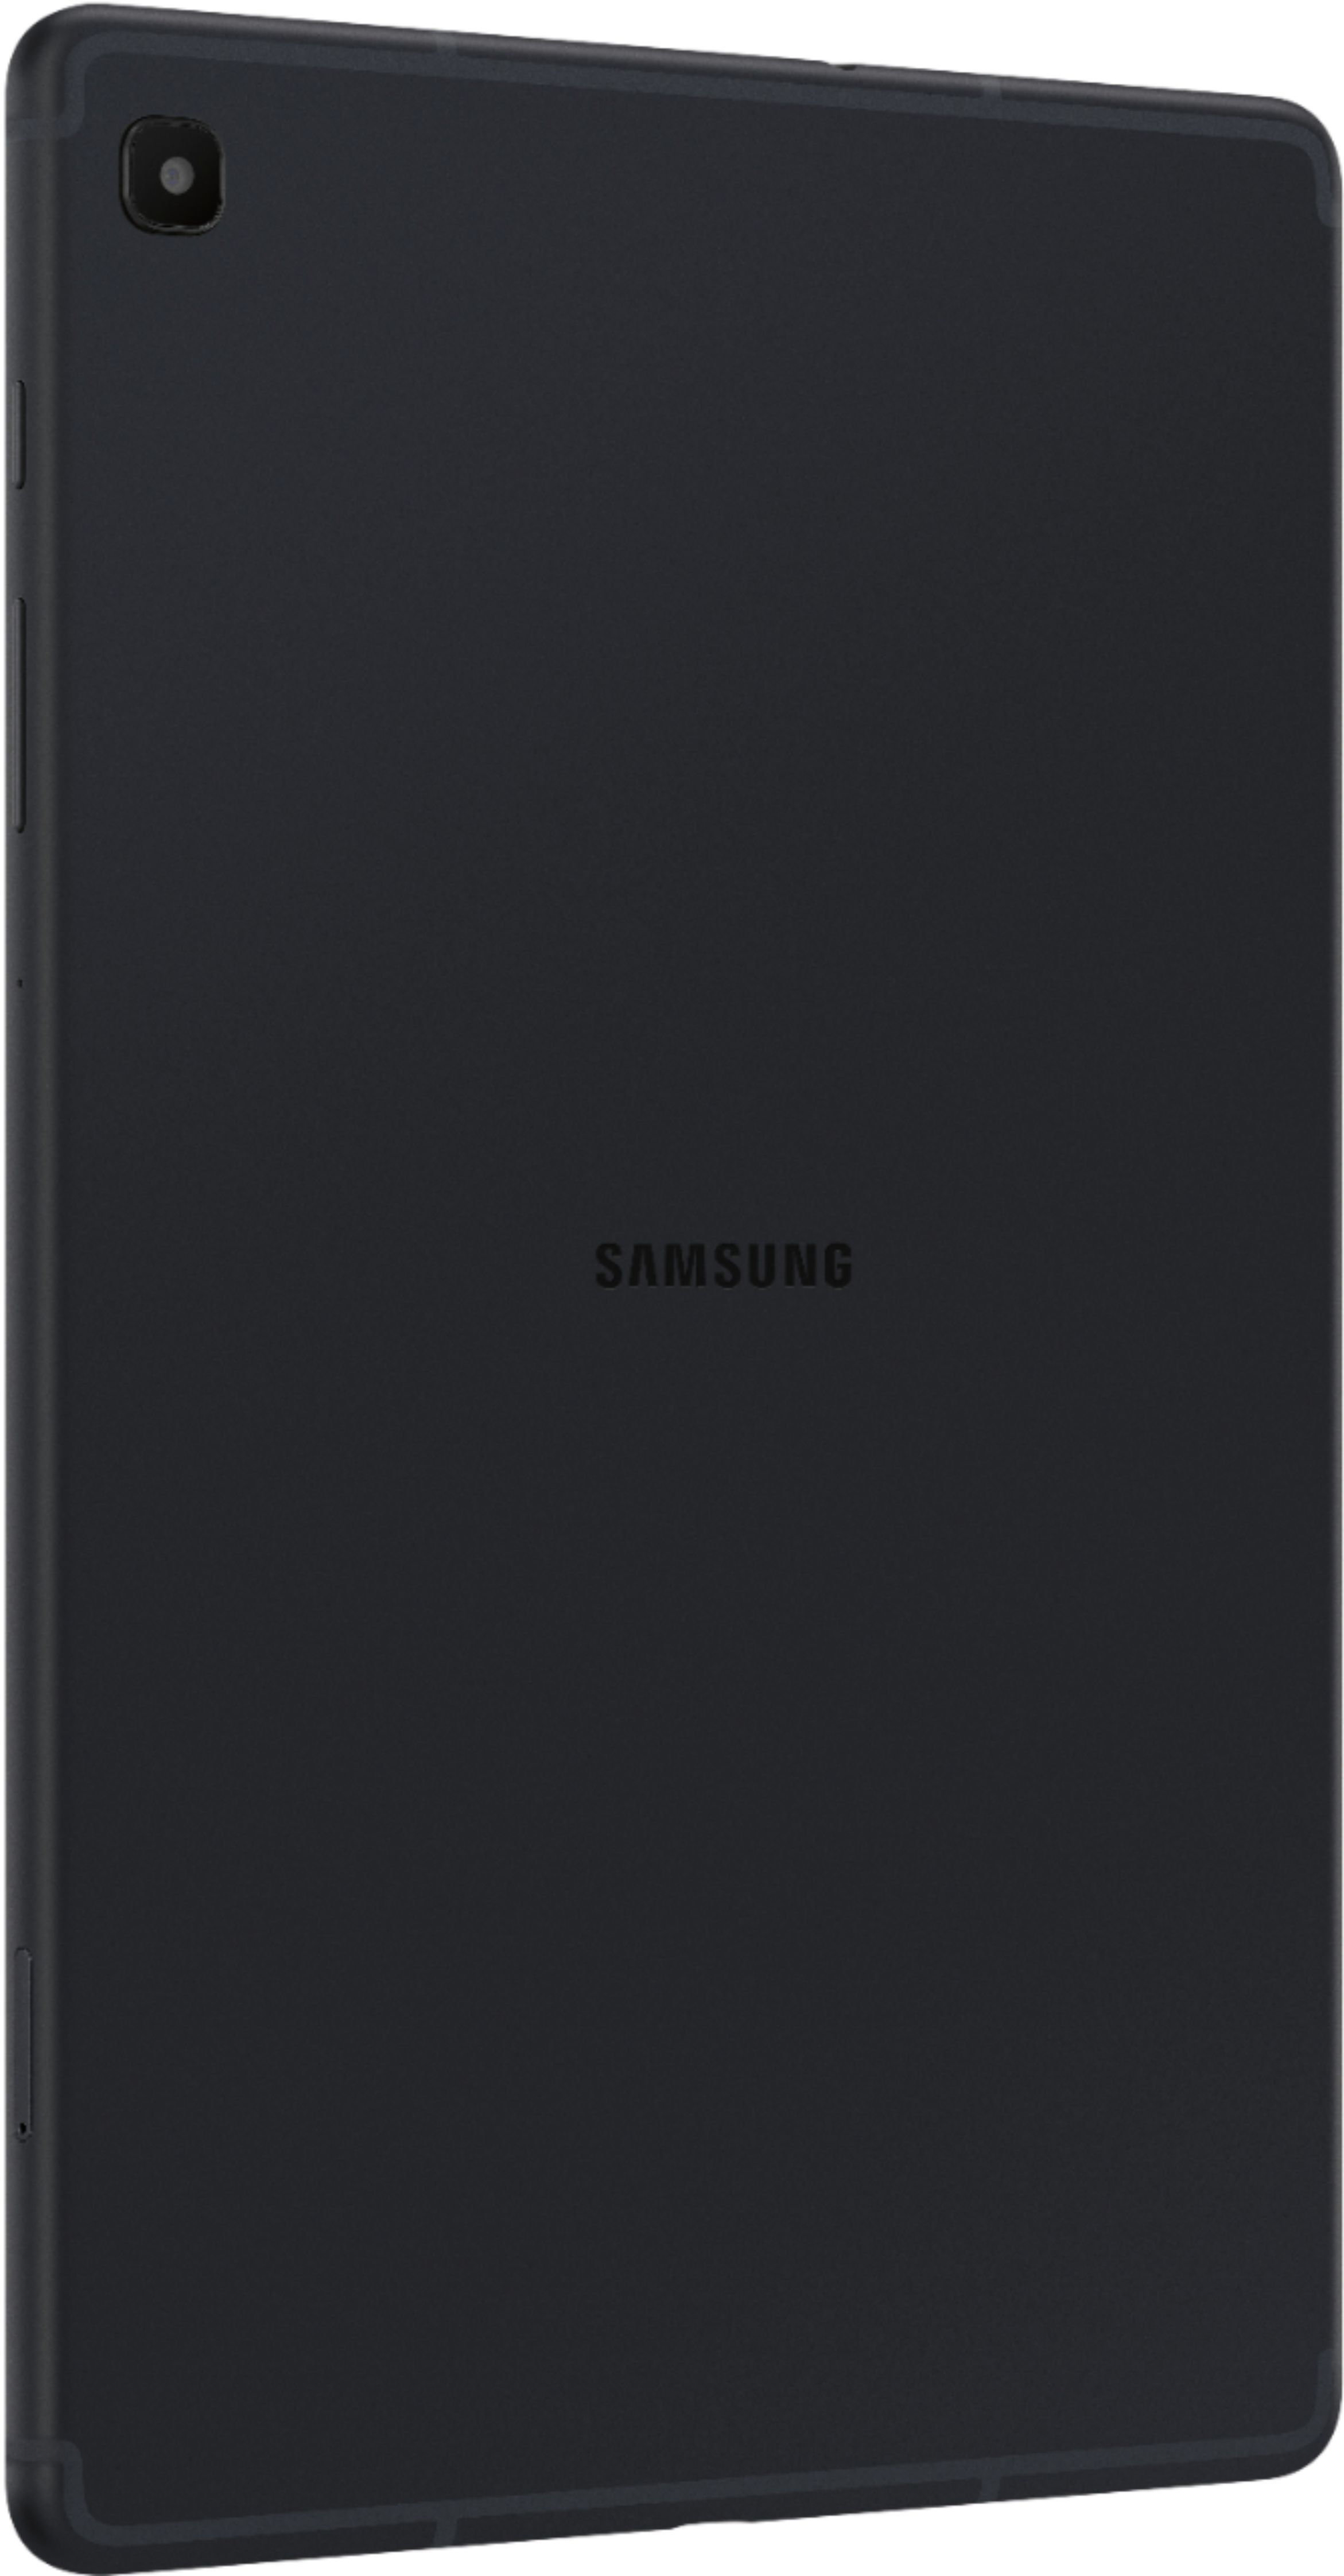 Galaxy Tab S6 Lite, 64GB, Oxford Gray (Wi-Fi) Tablets - SM